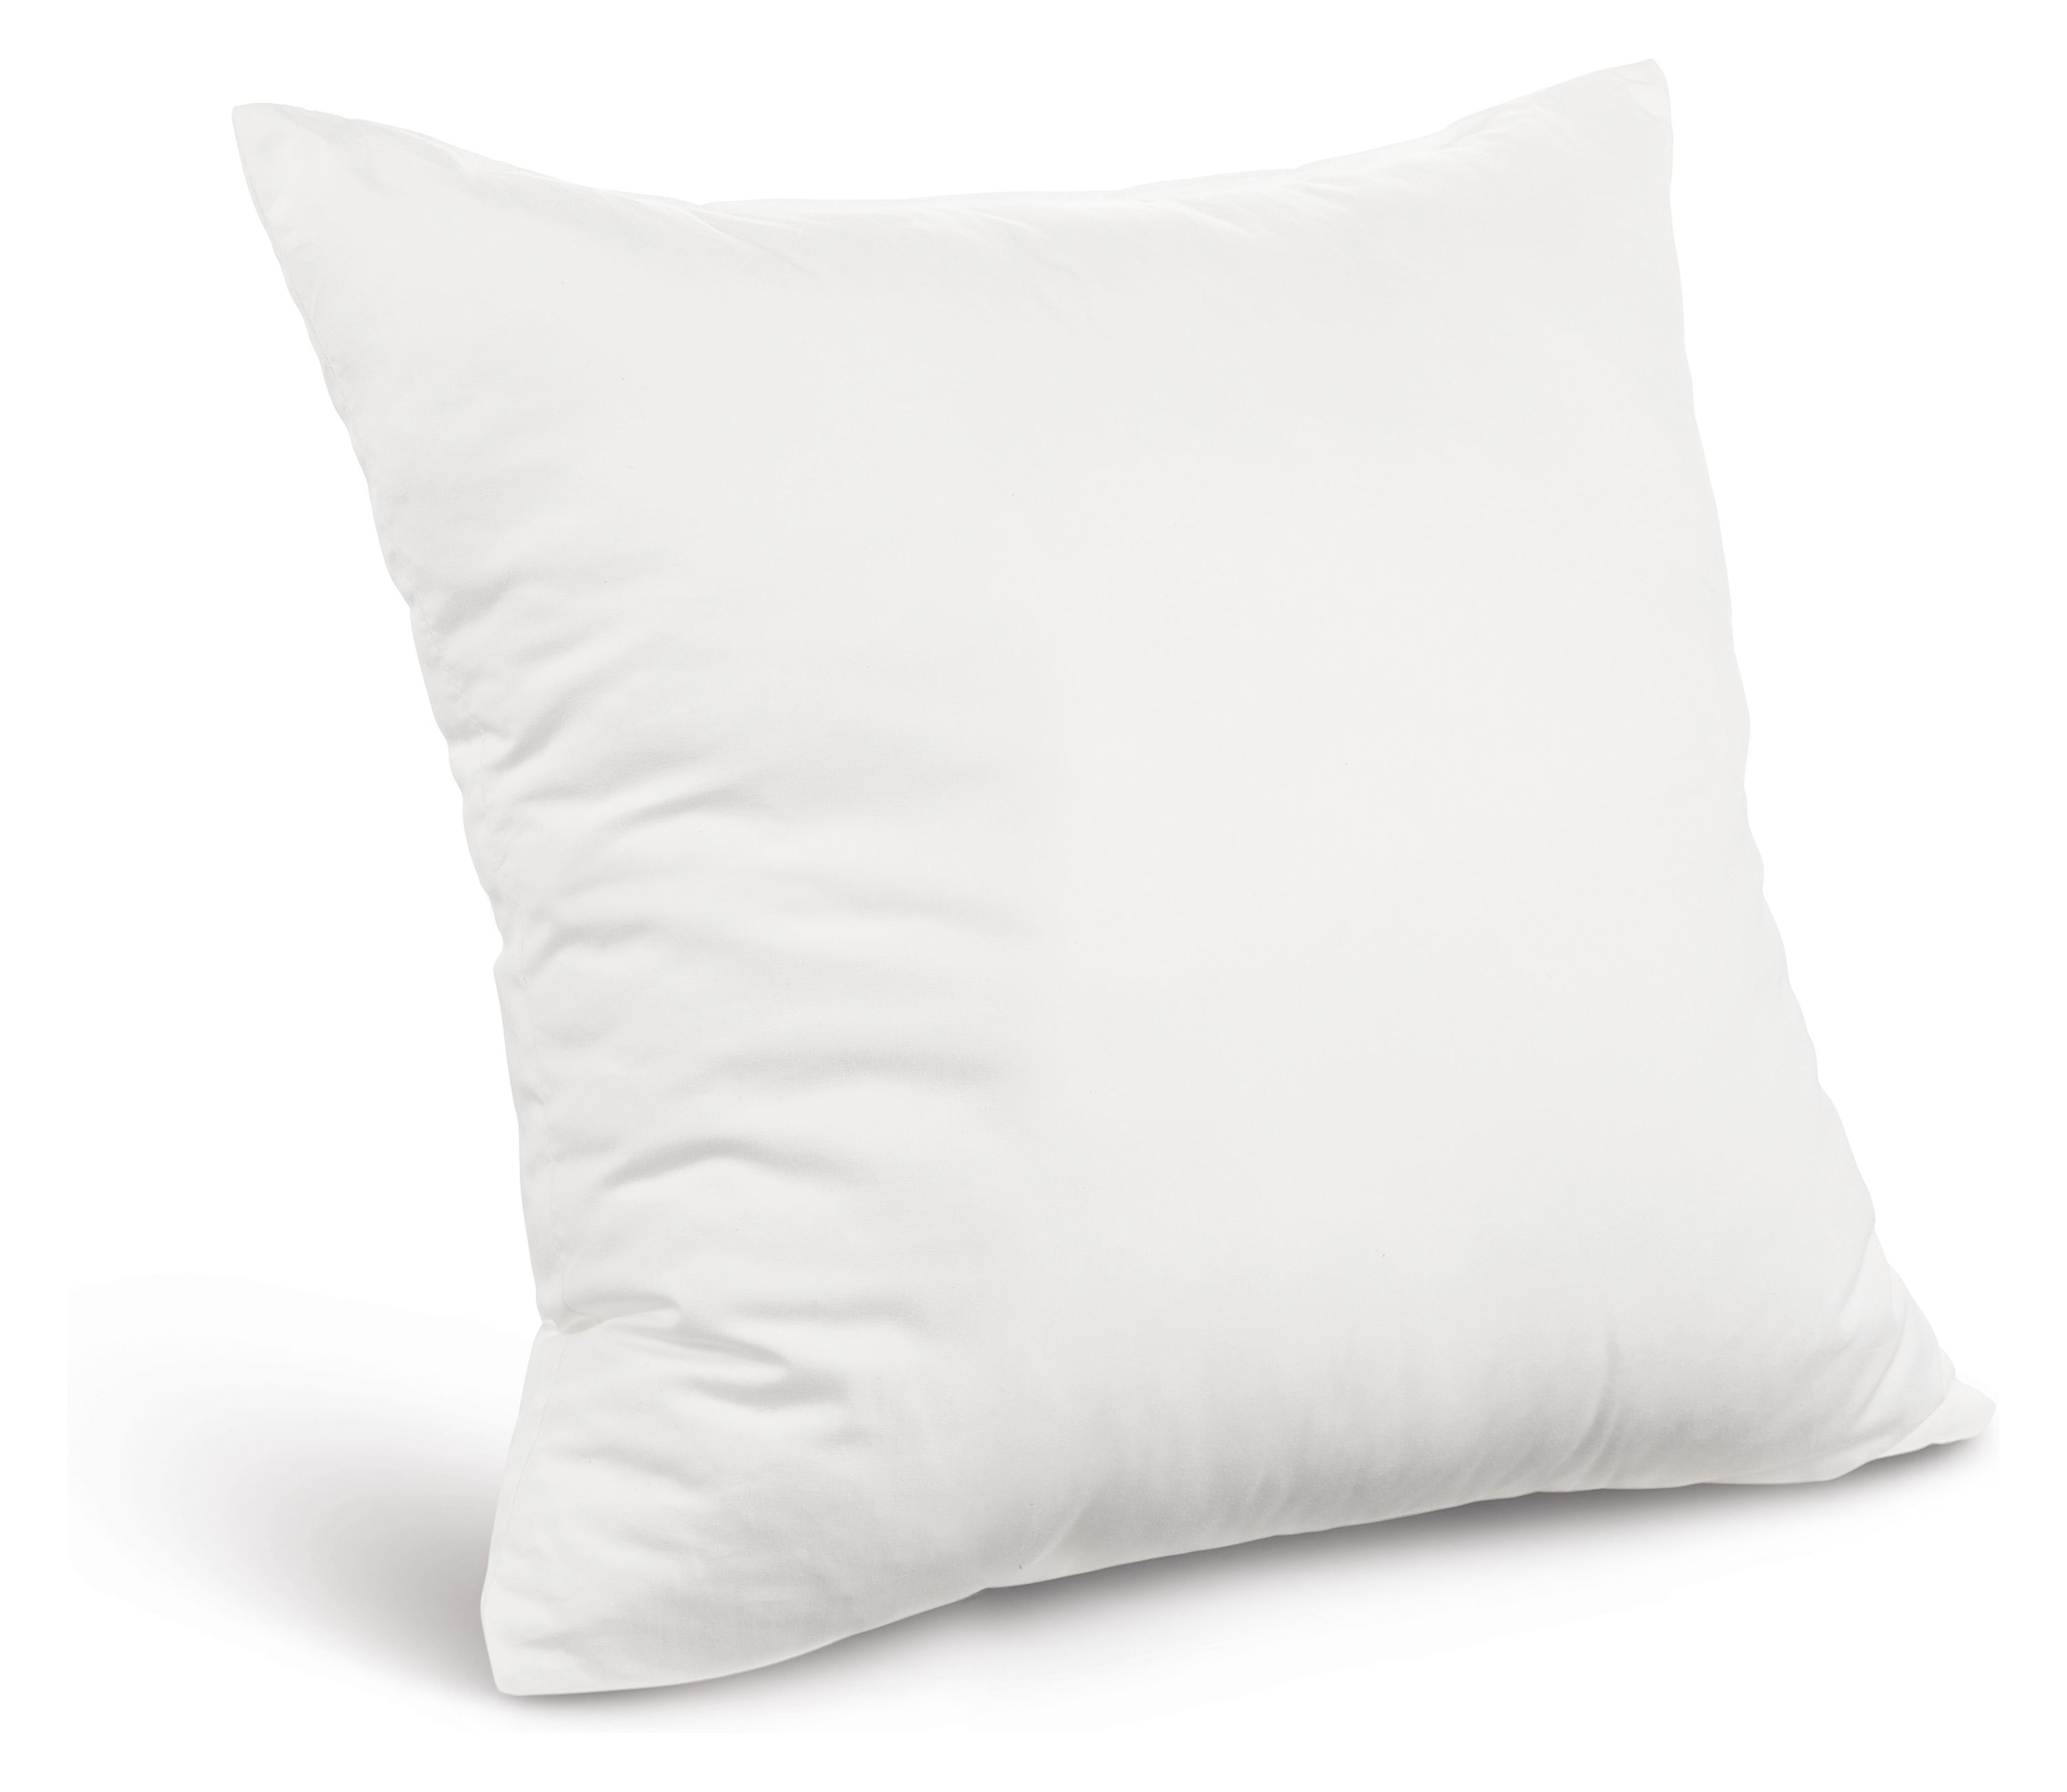 Restful Nights Euro Down Alternative Insert Pillow, 22x22, White